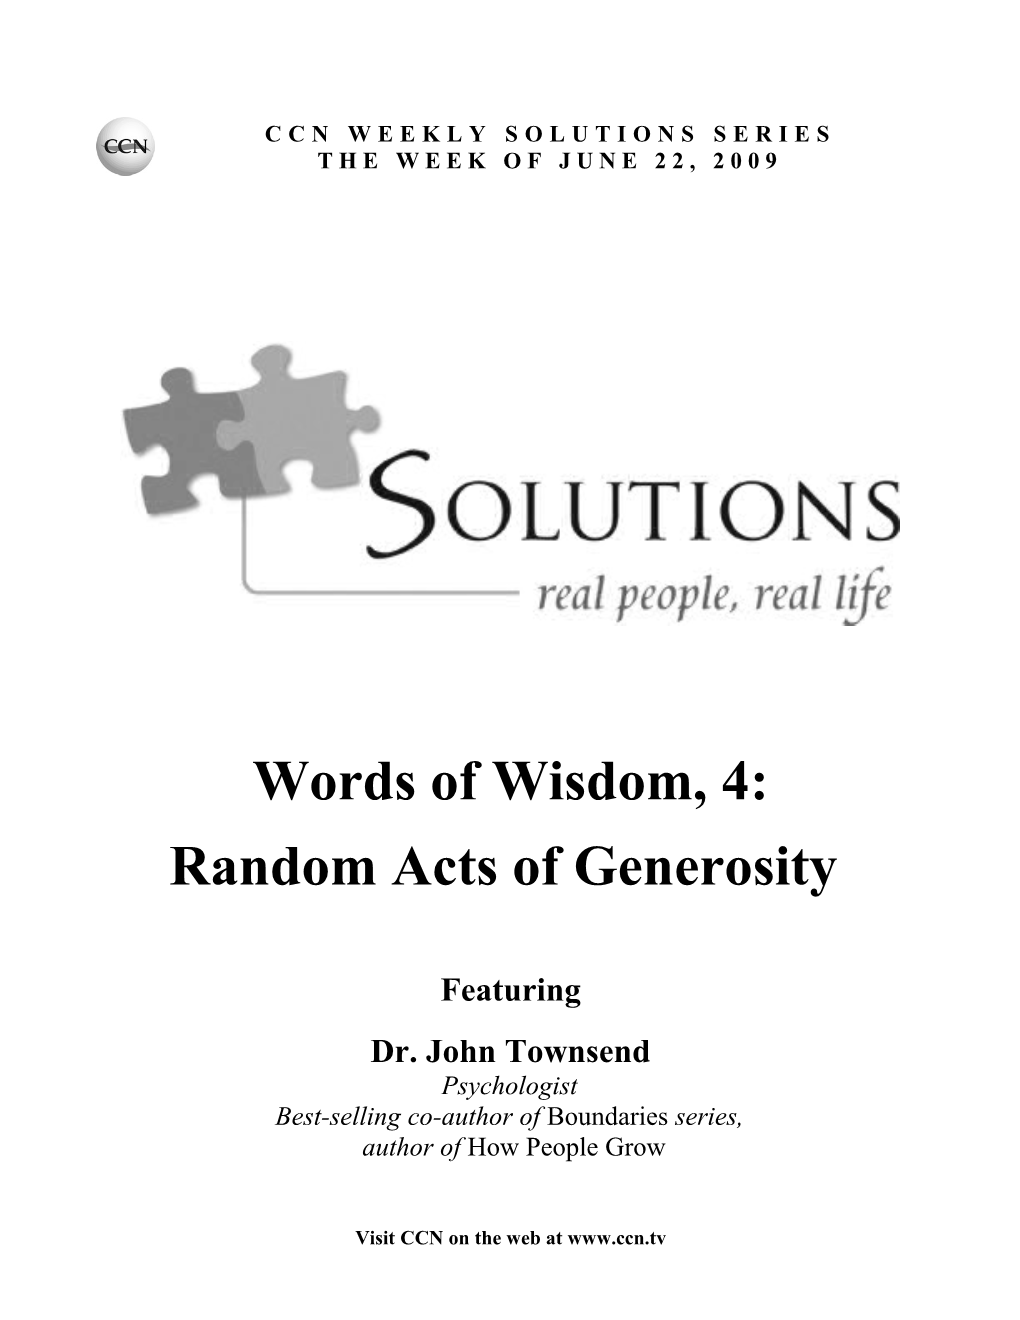 Ccnsolutions: Words of Wisdom, 4 Random Acts of Generositypage 1